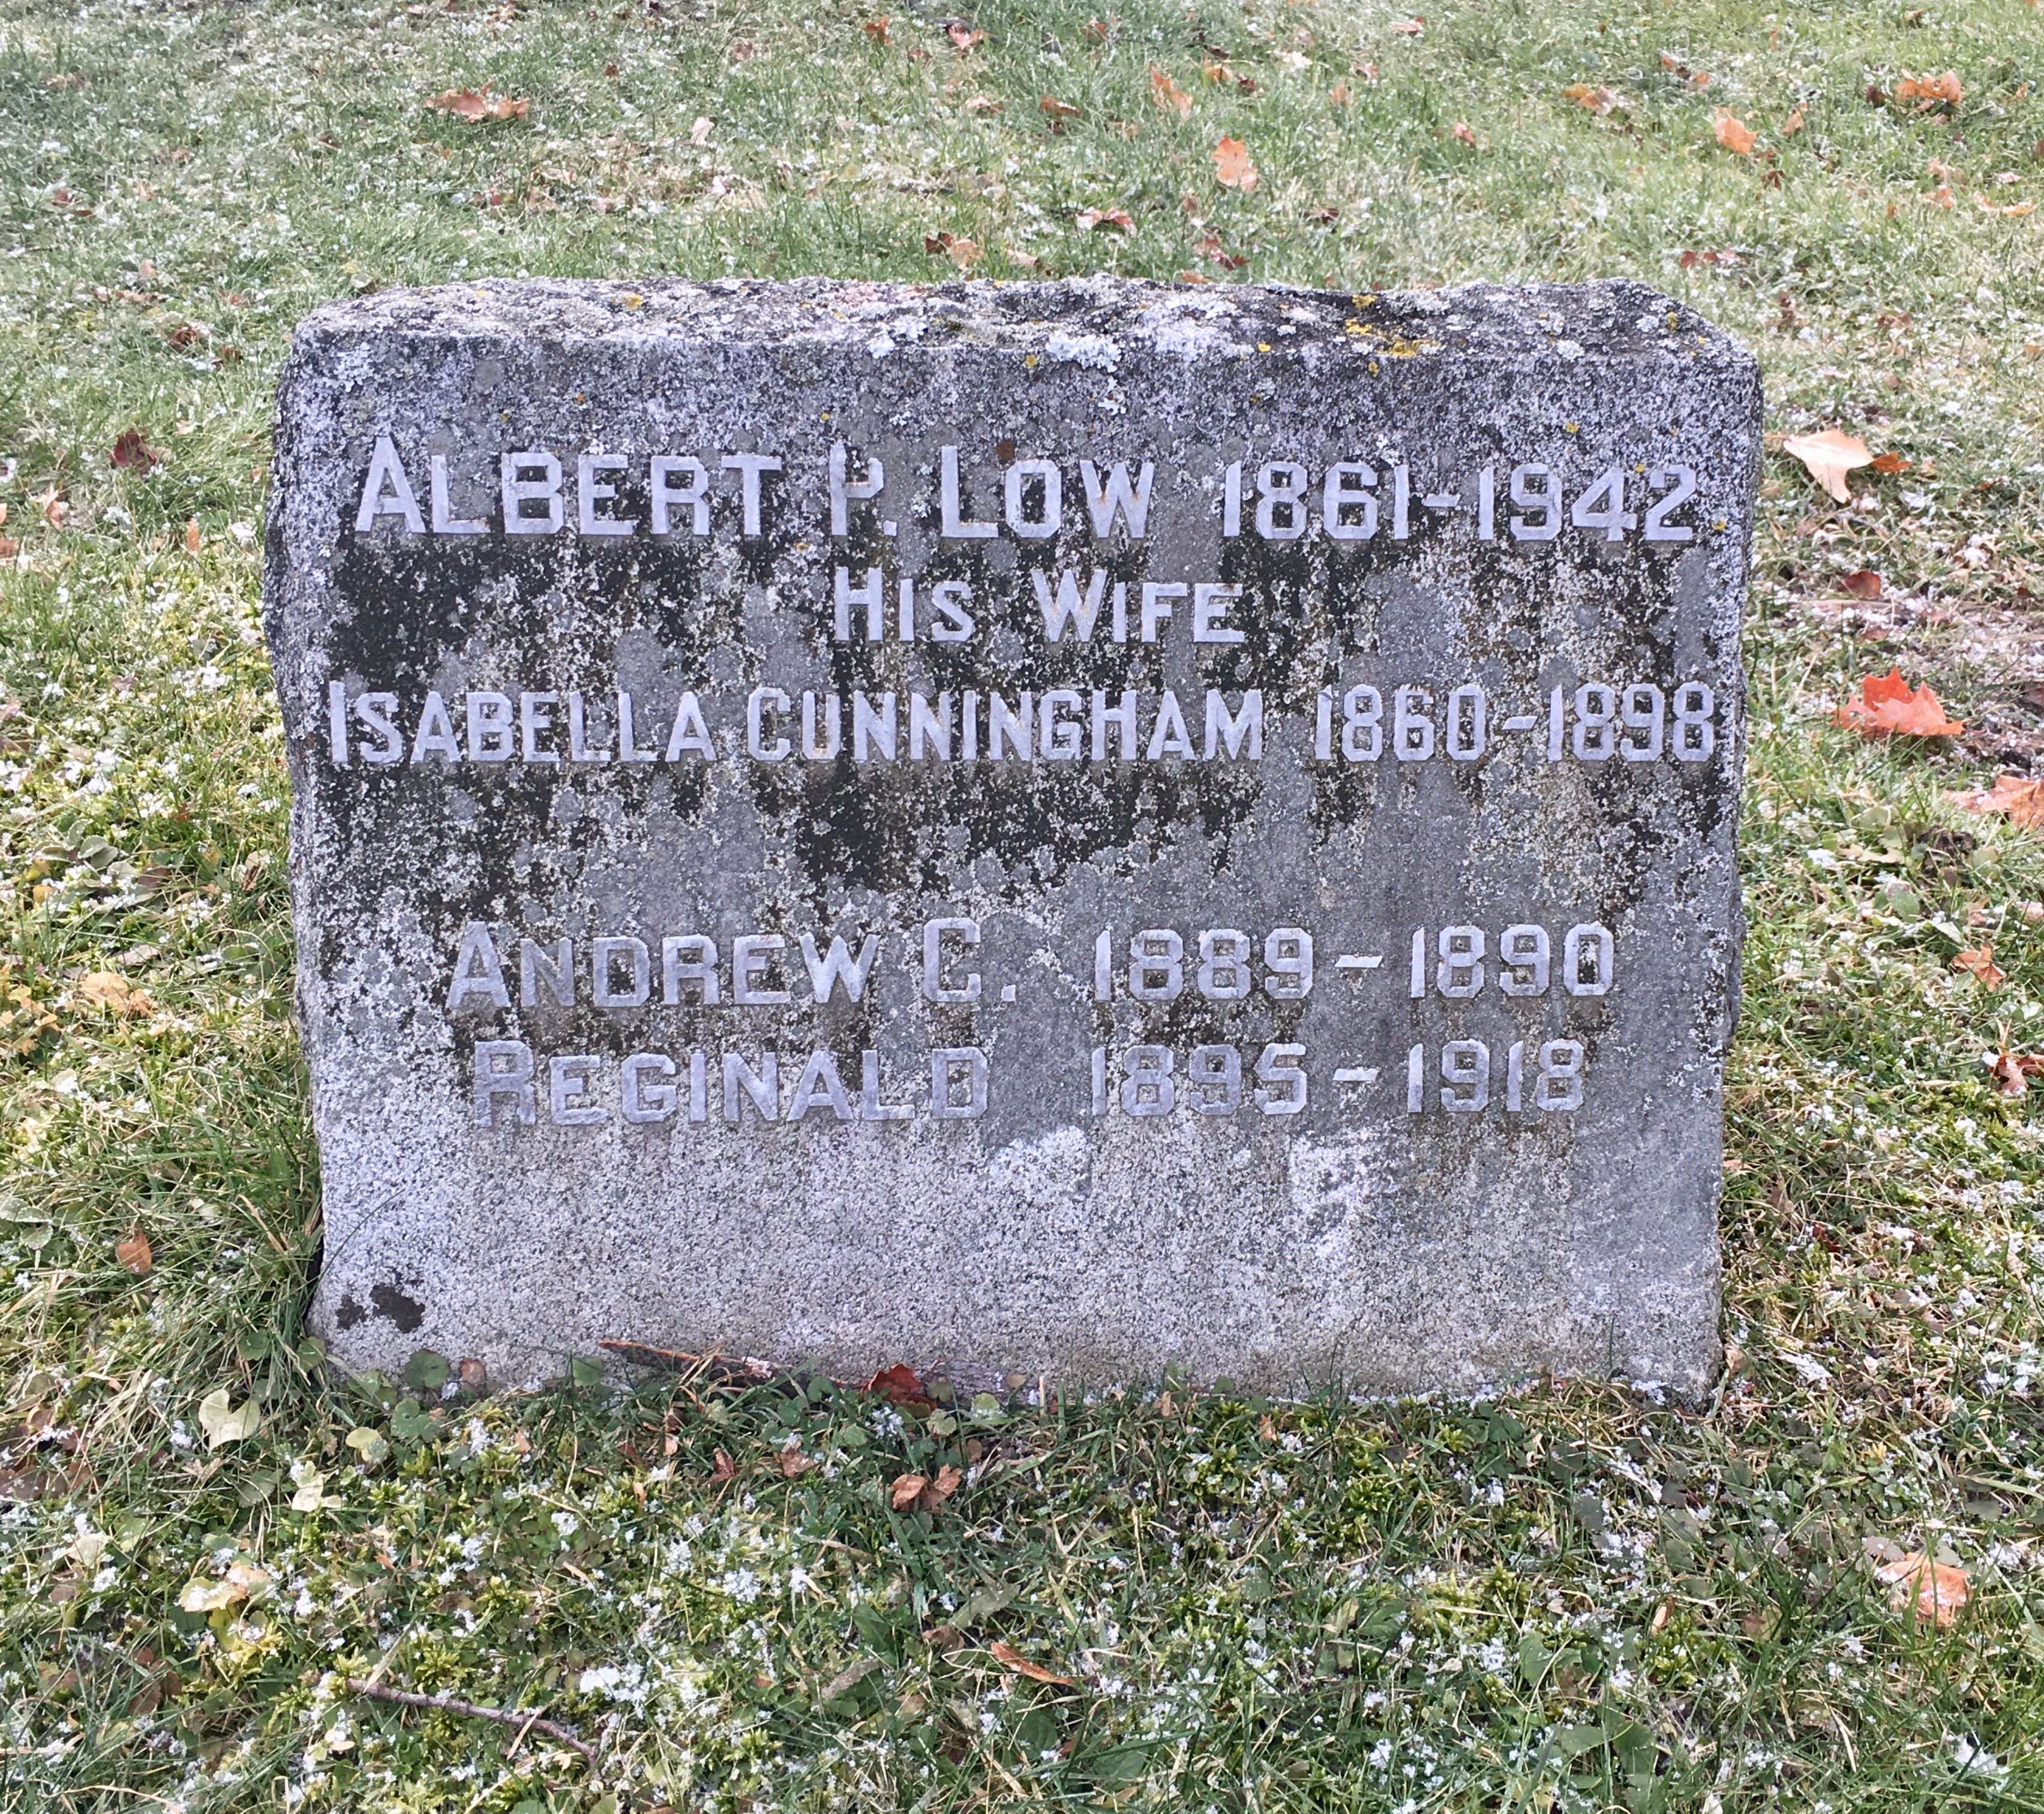 Low's headstone